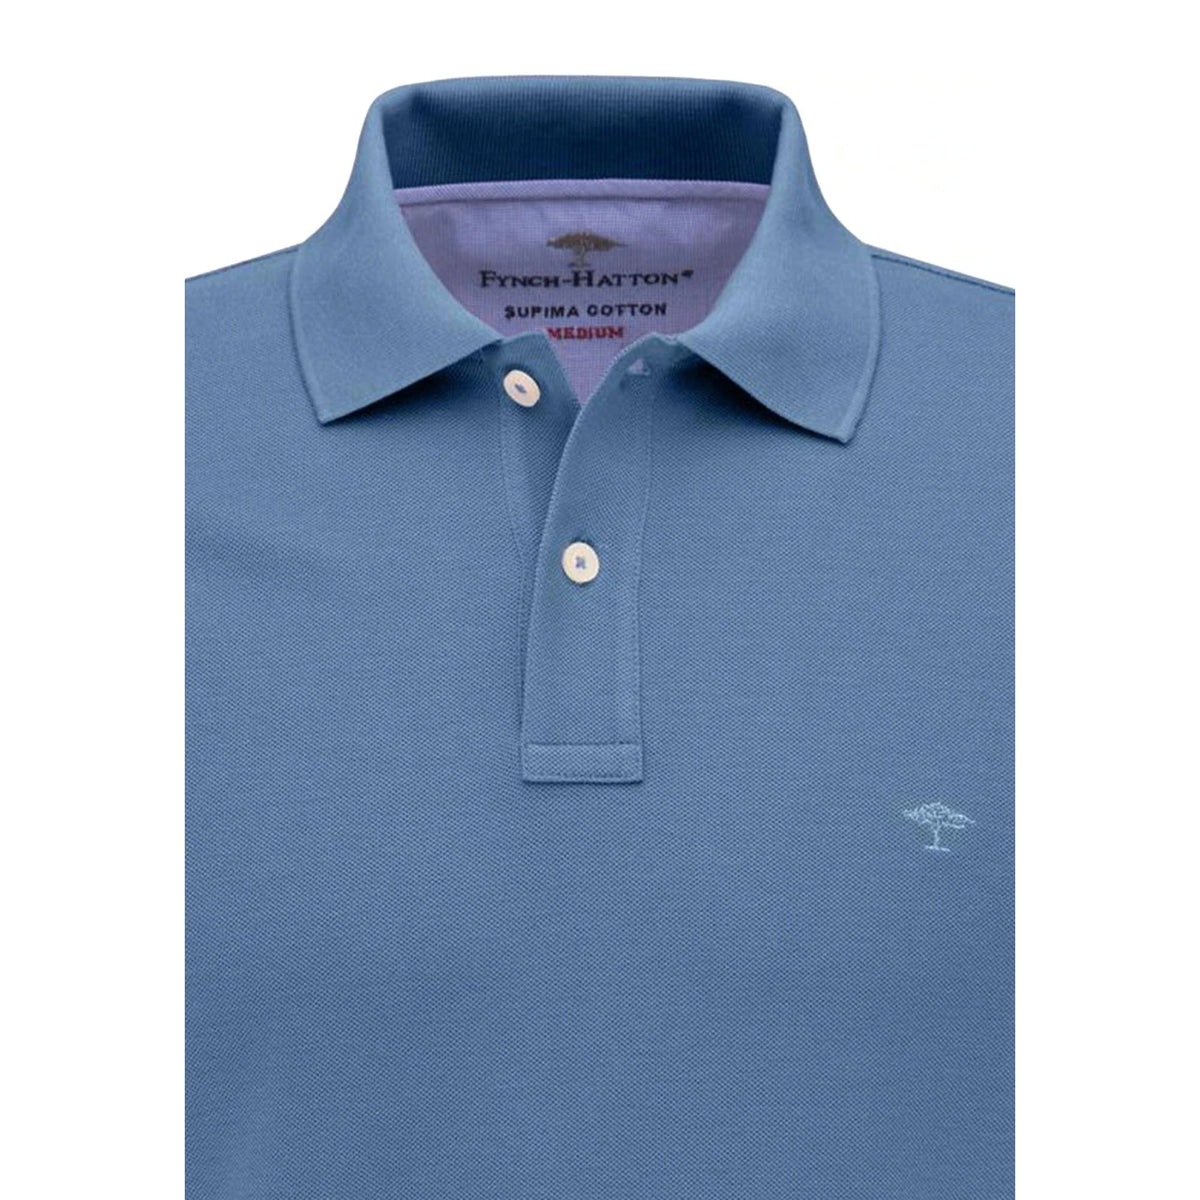 Fynch-Hatton Classic Supima Cotton Blue Polo Shirt │ Bortex - Bortex ...